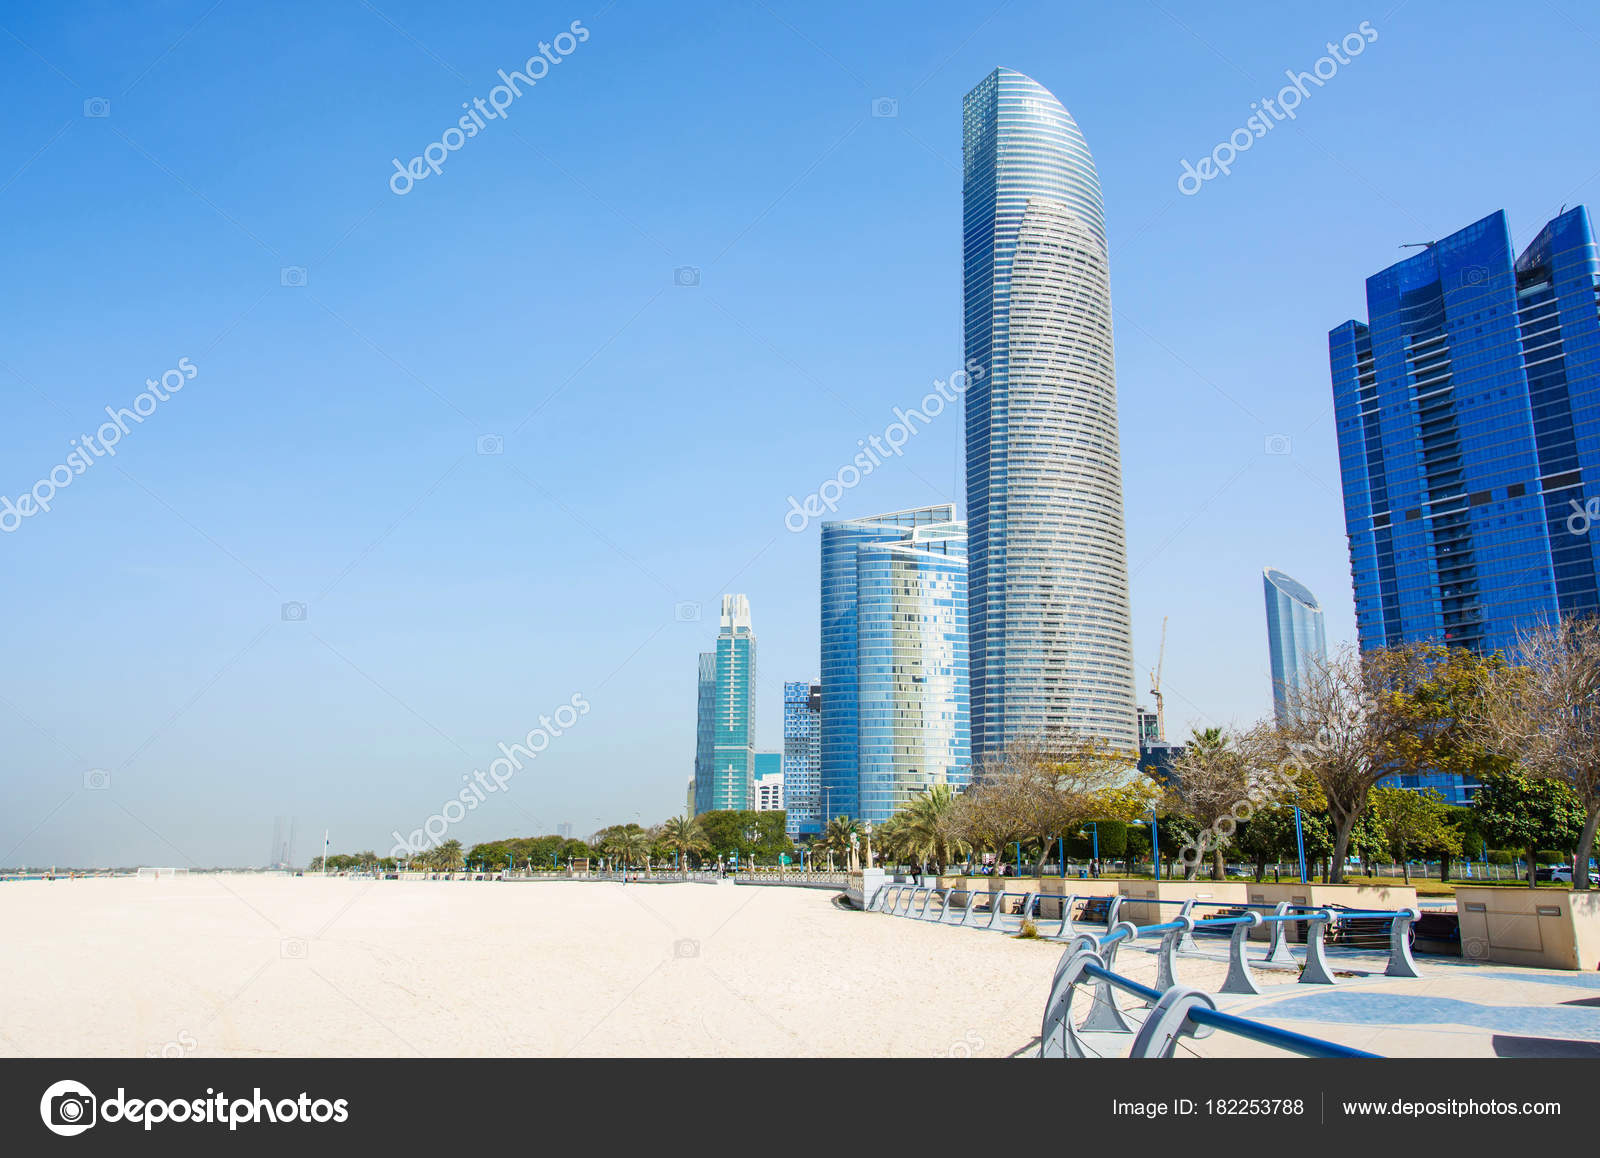 Abu Dhabi Corniche Beach And Walking Area With Landmark View Of